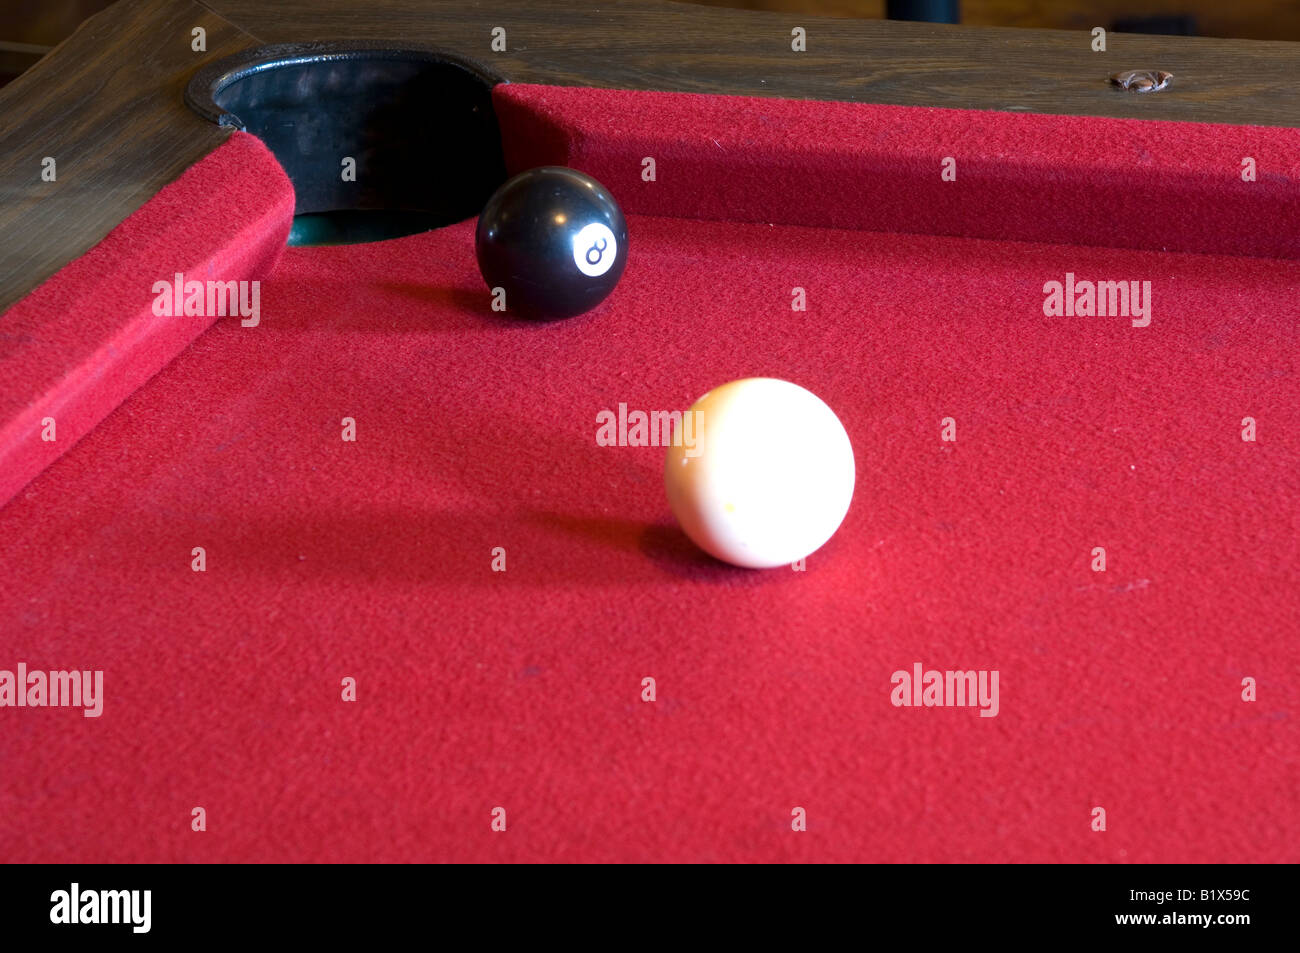 Pool balls on pool table Stock Photo